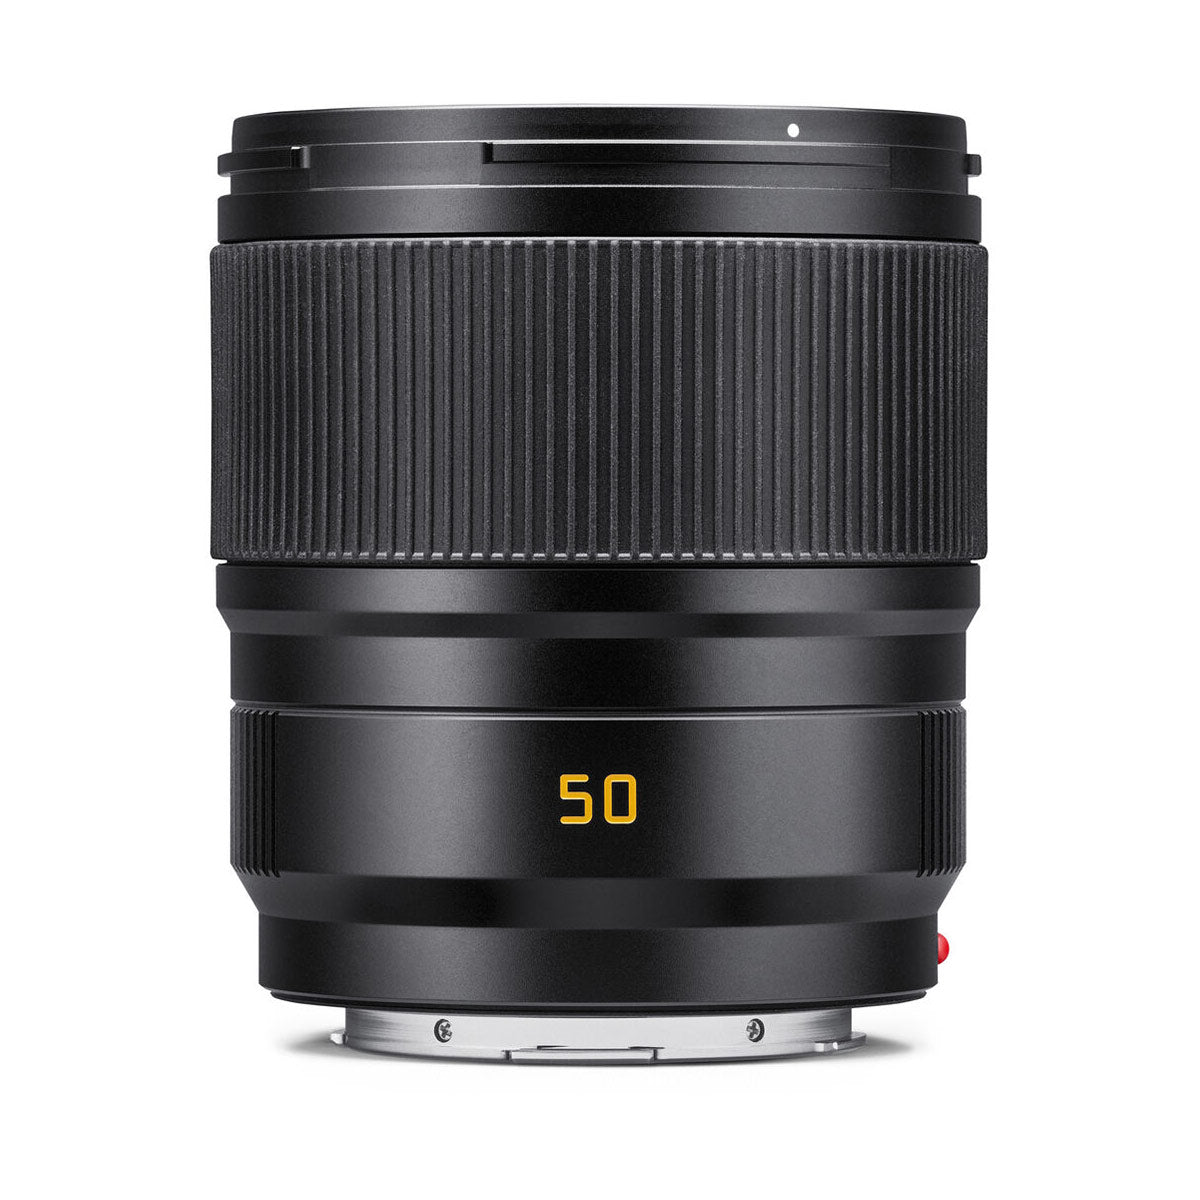 Leica SL2-S Mirrorless Digital Camera with 50mm f/2 Summicron-SL ASPH Lens